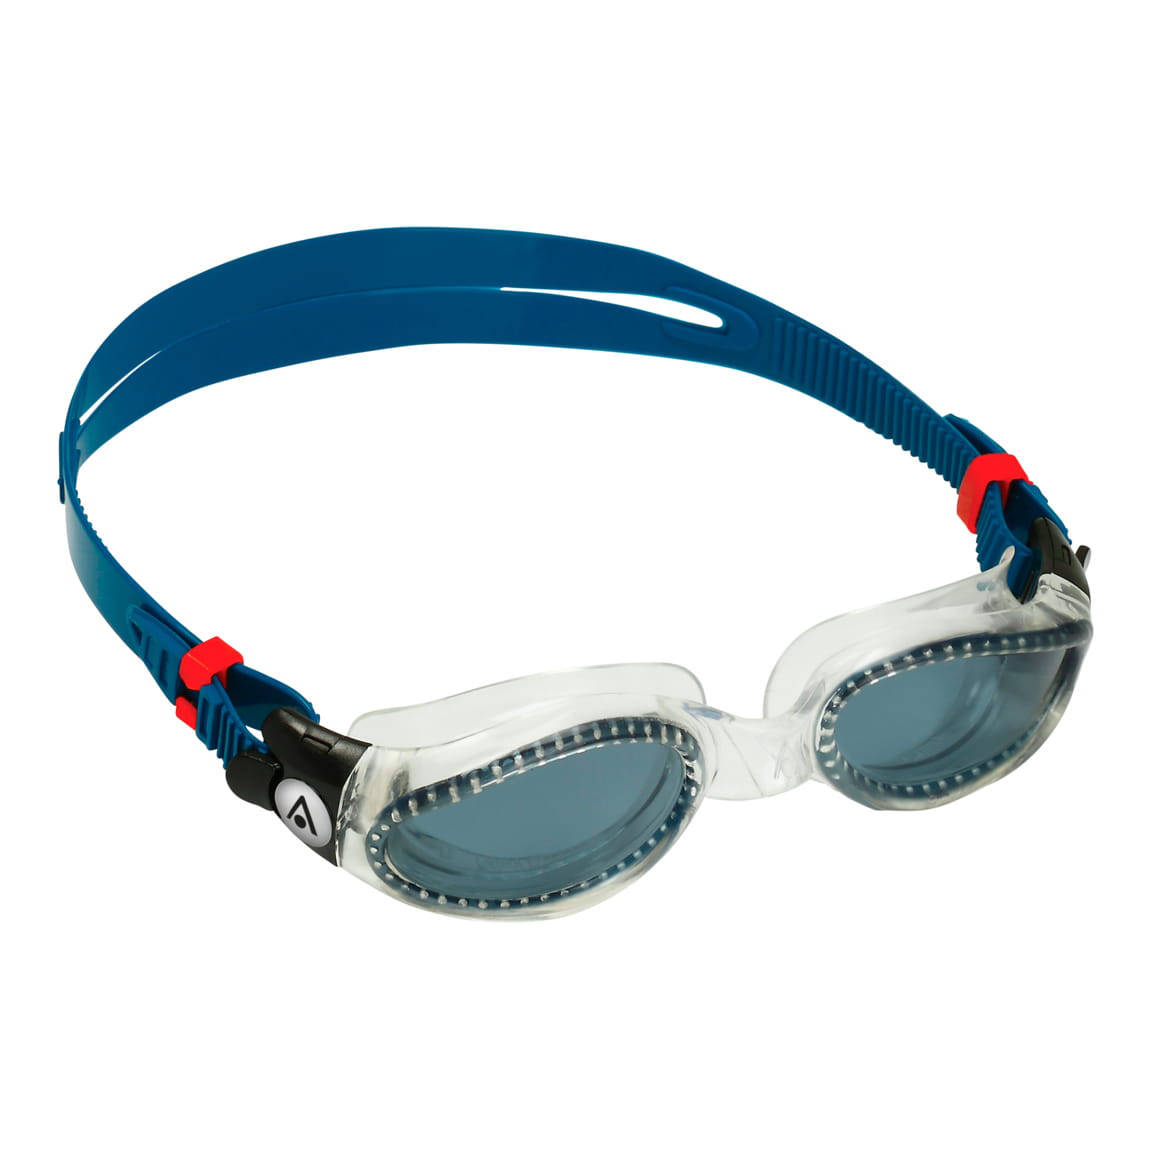 Aquasphere okulary Kaiman ciemne szkła clear-petrol